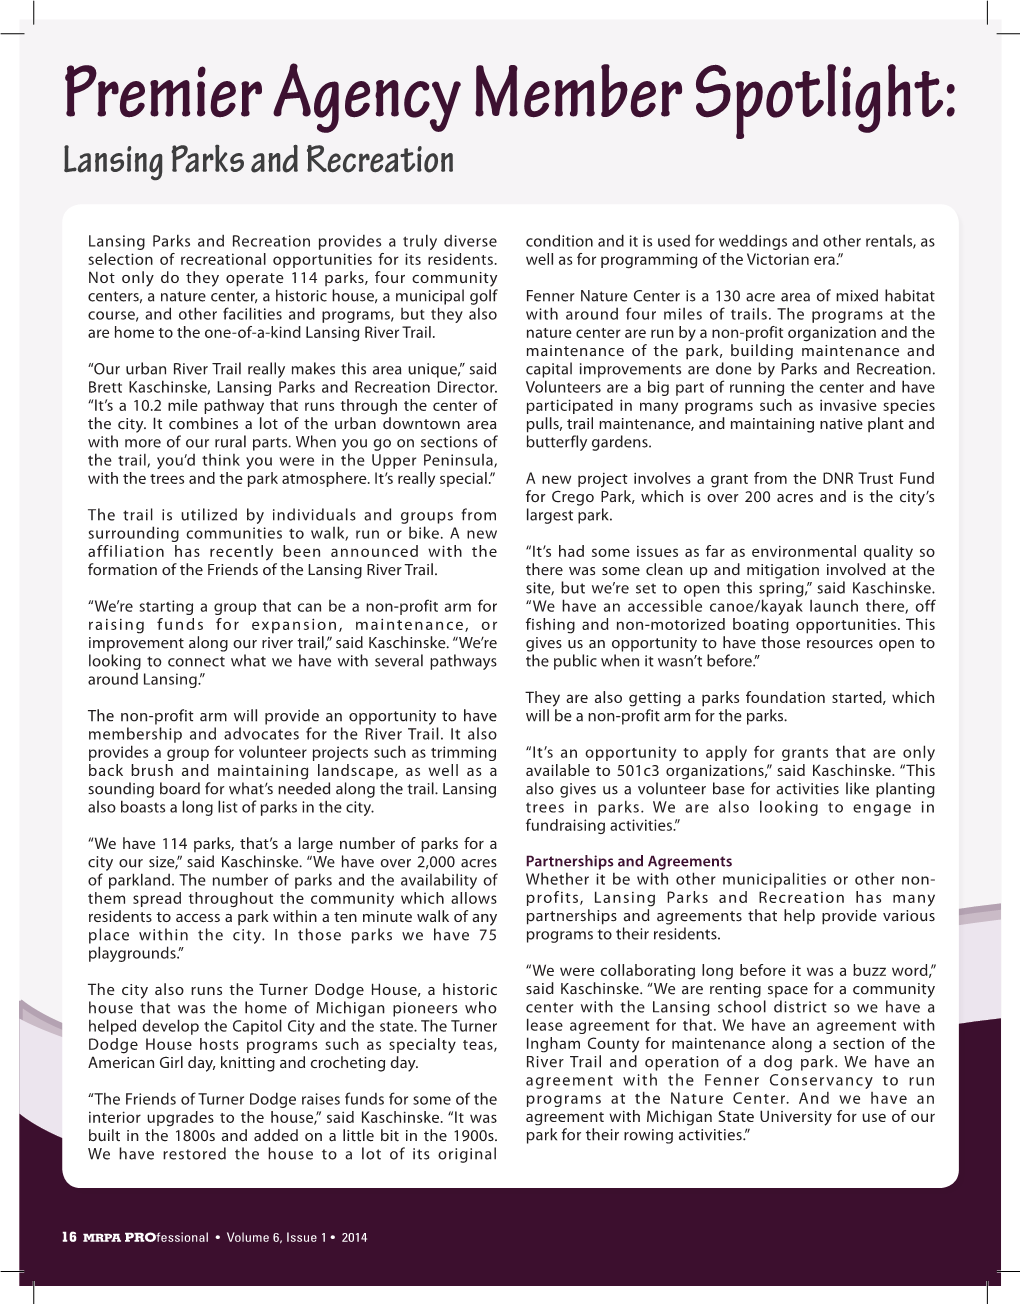 Spotlight on Lansing Parks and Rec